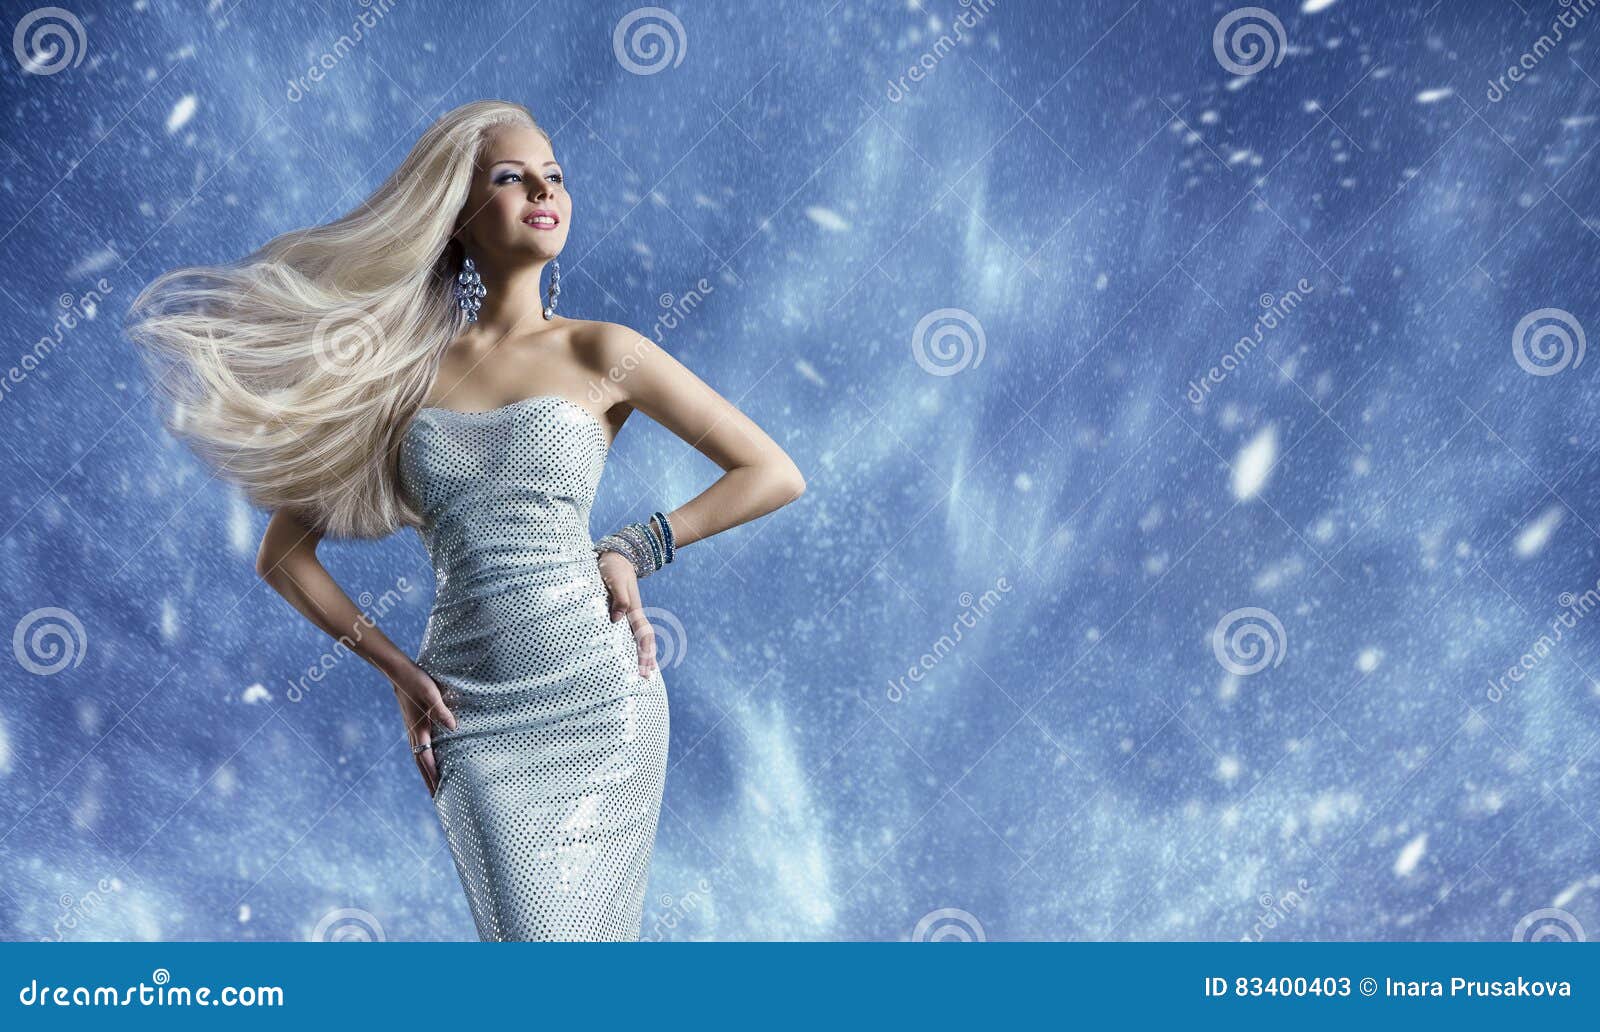 woman elegant fashion dress, long hair waving wind, winter beauty